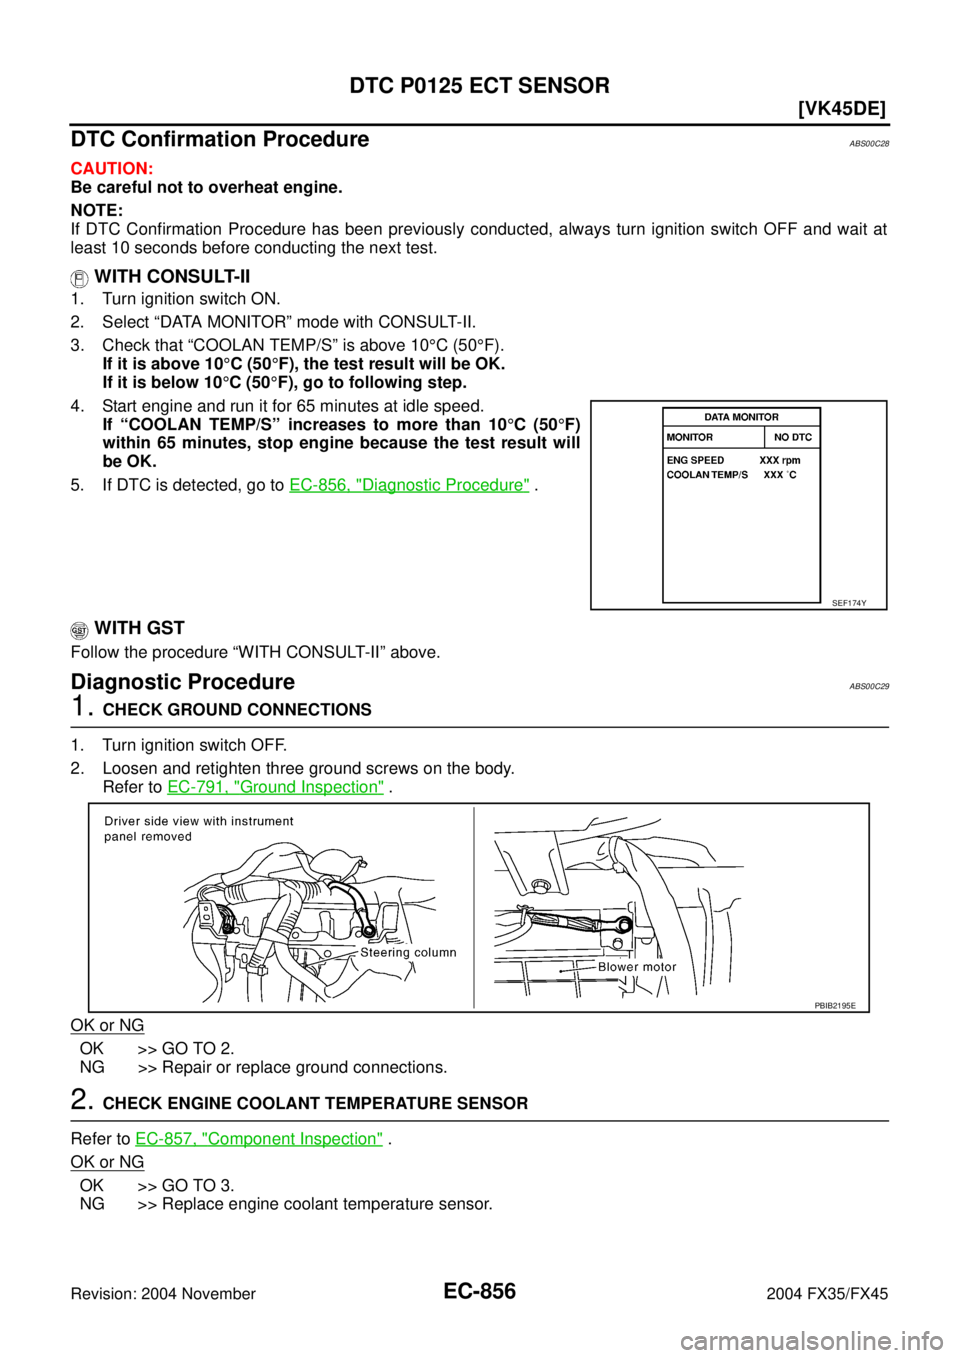 INFINITI FX35 2004  Service Manual EC-856
[VK45DE]
DTC P0125 ECT SENSOR
Revision: 2004 November 2004 FX35/FX45
DTC Confirmation ProcedureABS00C28
CAUTION:
Be careful not to overheat engine.
NOTE:
If DTC Confirmation Procedure has been 